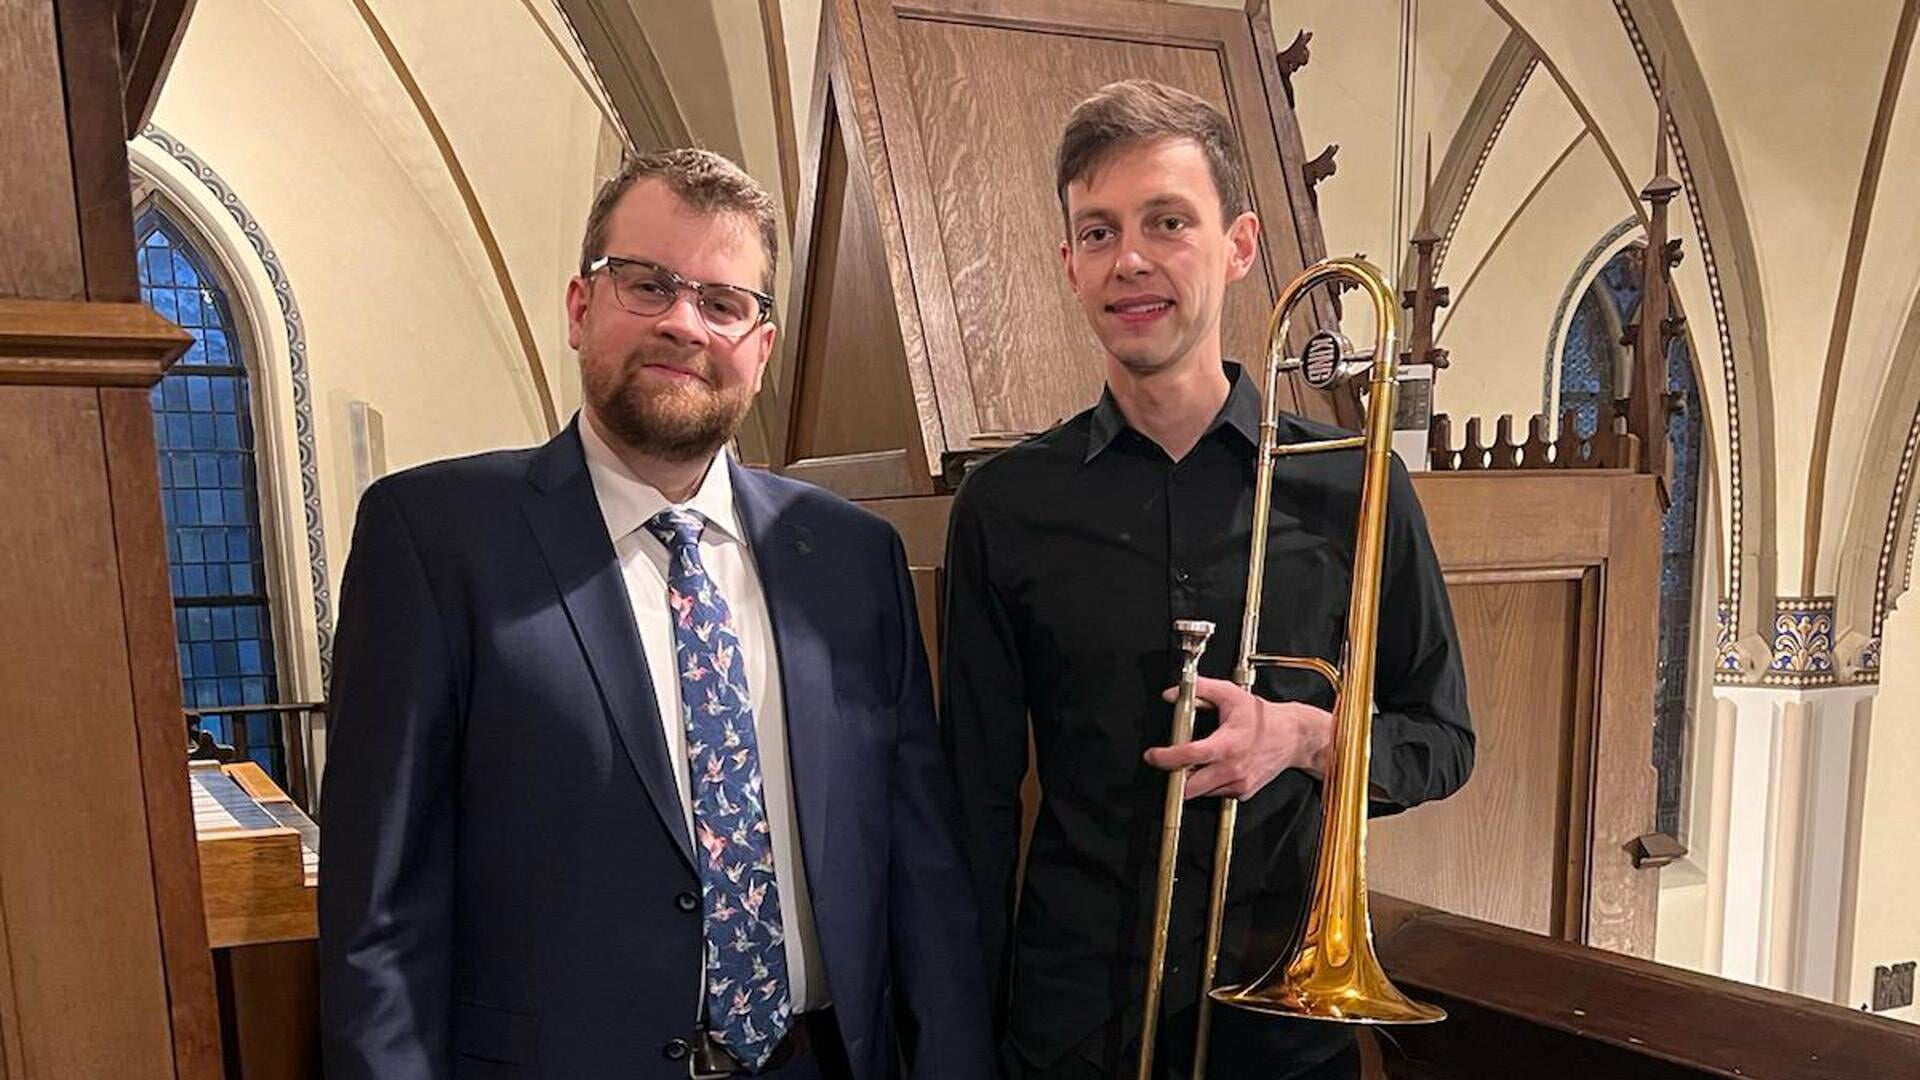 Organisit Kamil Gizenski en trombonist Henrik Wallraven. Foto: PR